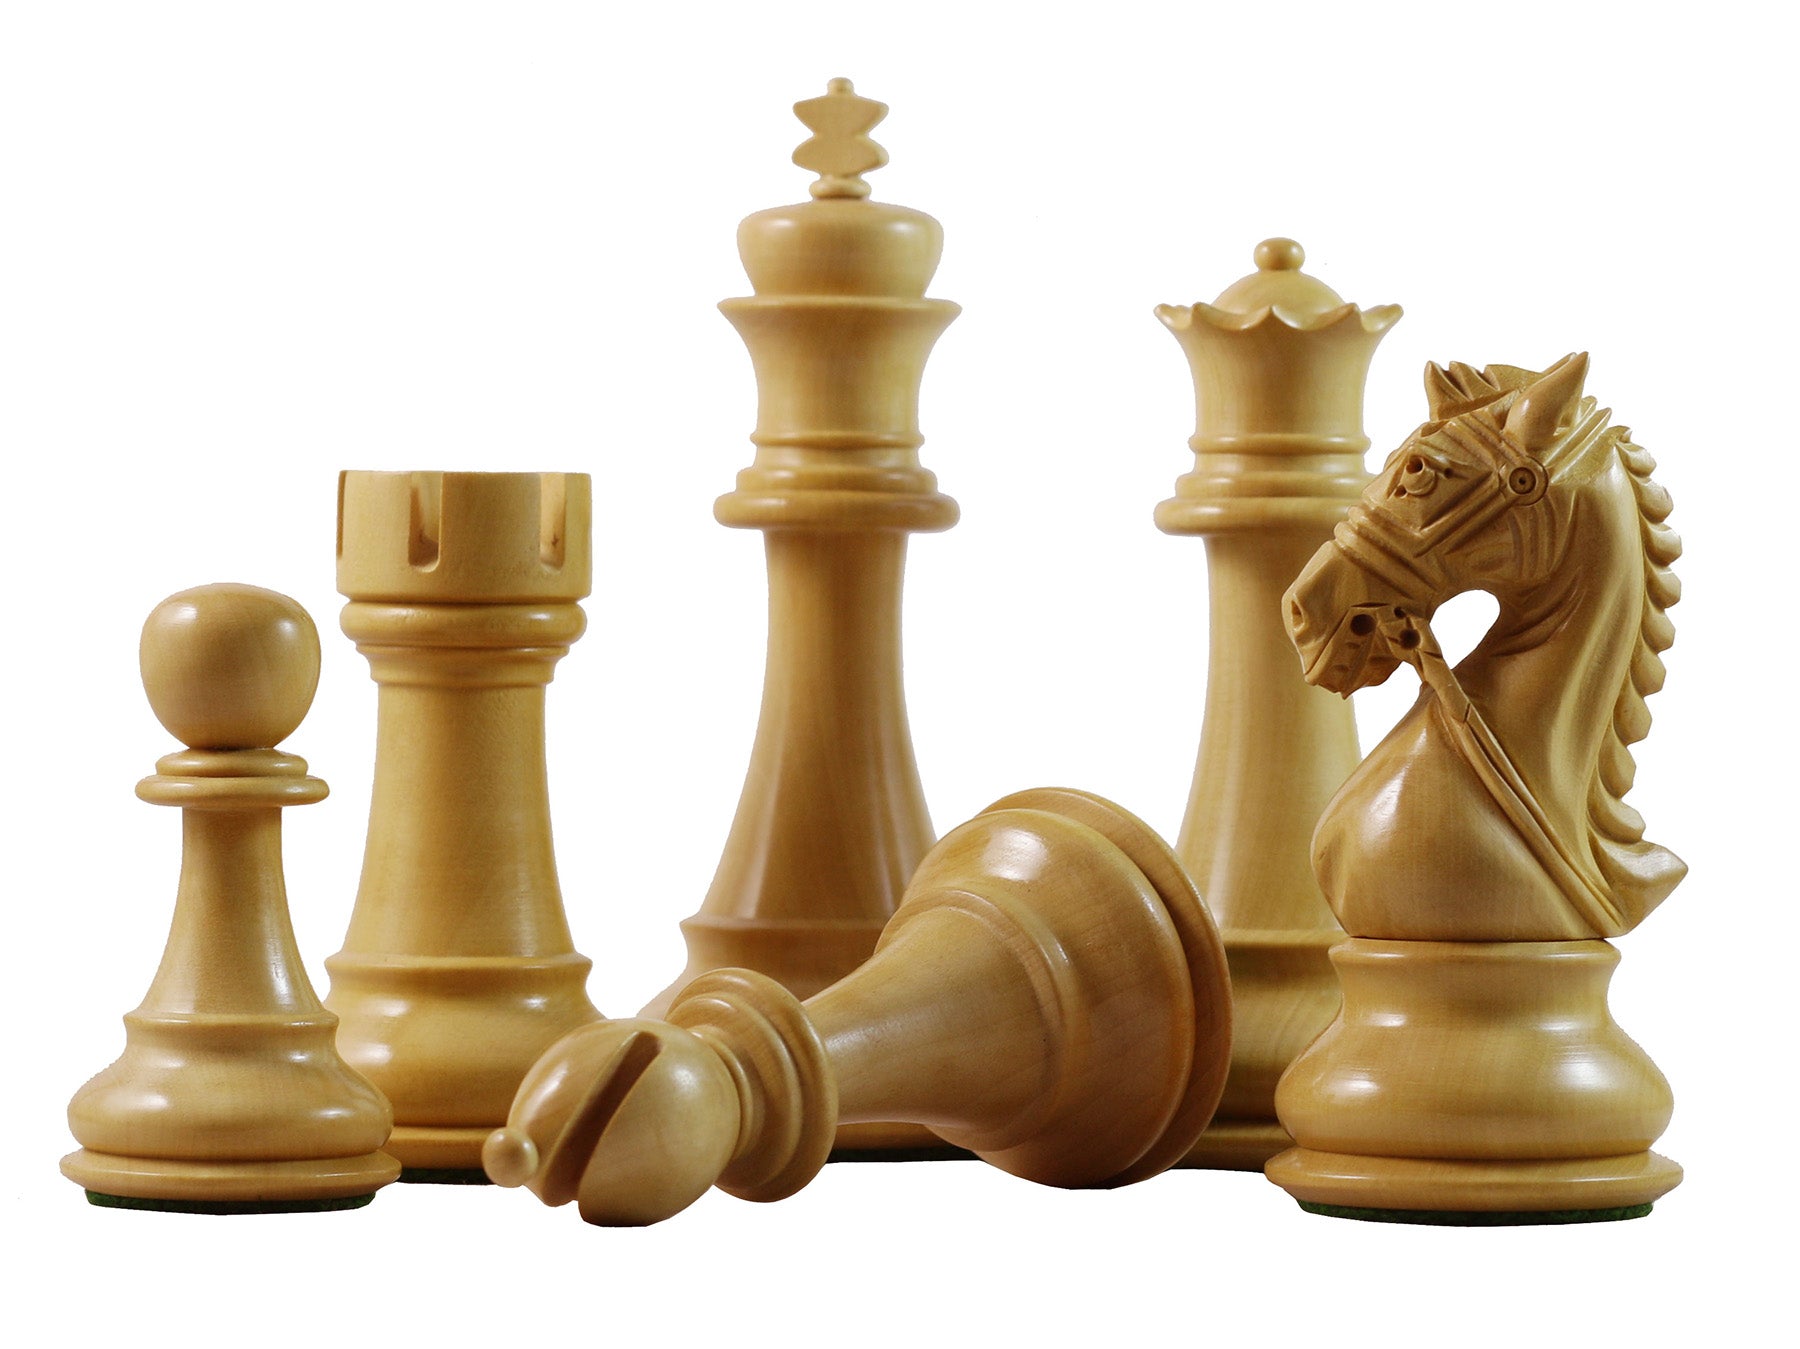 Bridle Series 4.5" Premium Staunton Chess Set in Ebony and Box wood